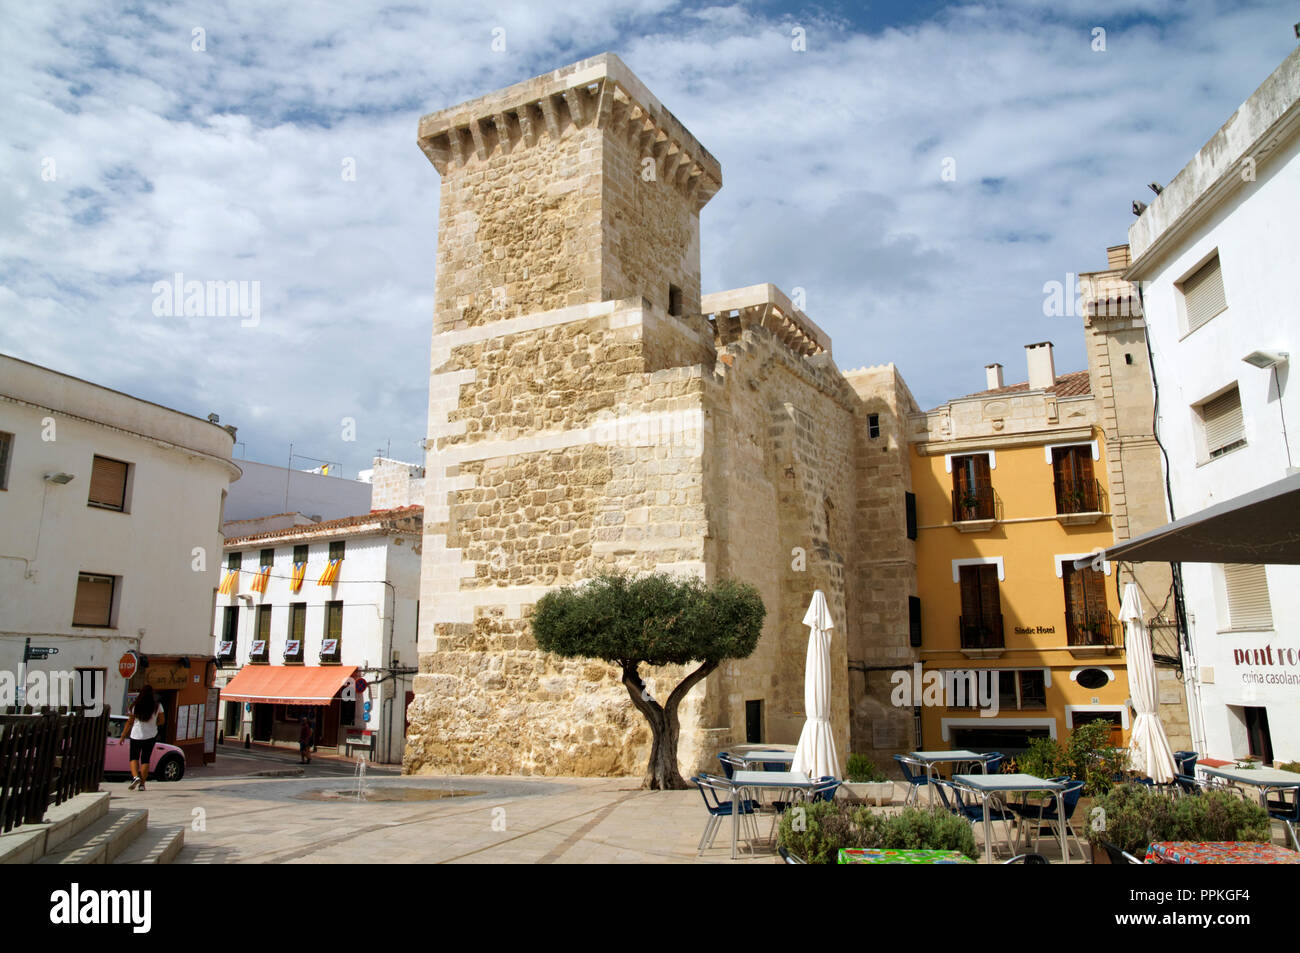 The Port De Sant Roc, Part of the original town wall of Mao or Mahon, Menorca, Balearic Islands, Spain. Stock Photo